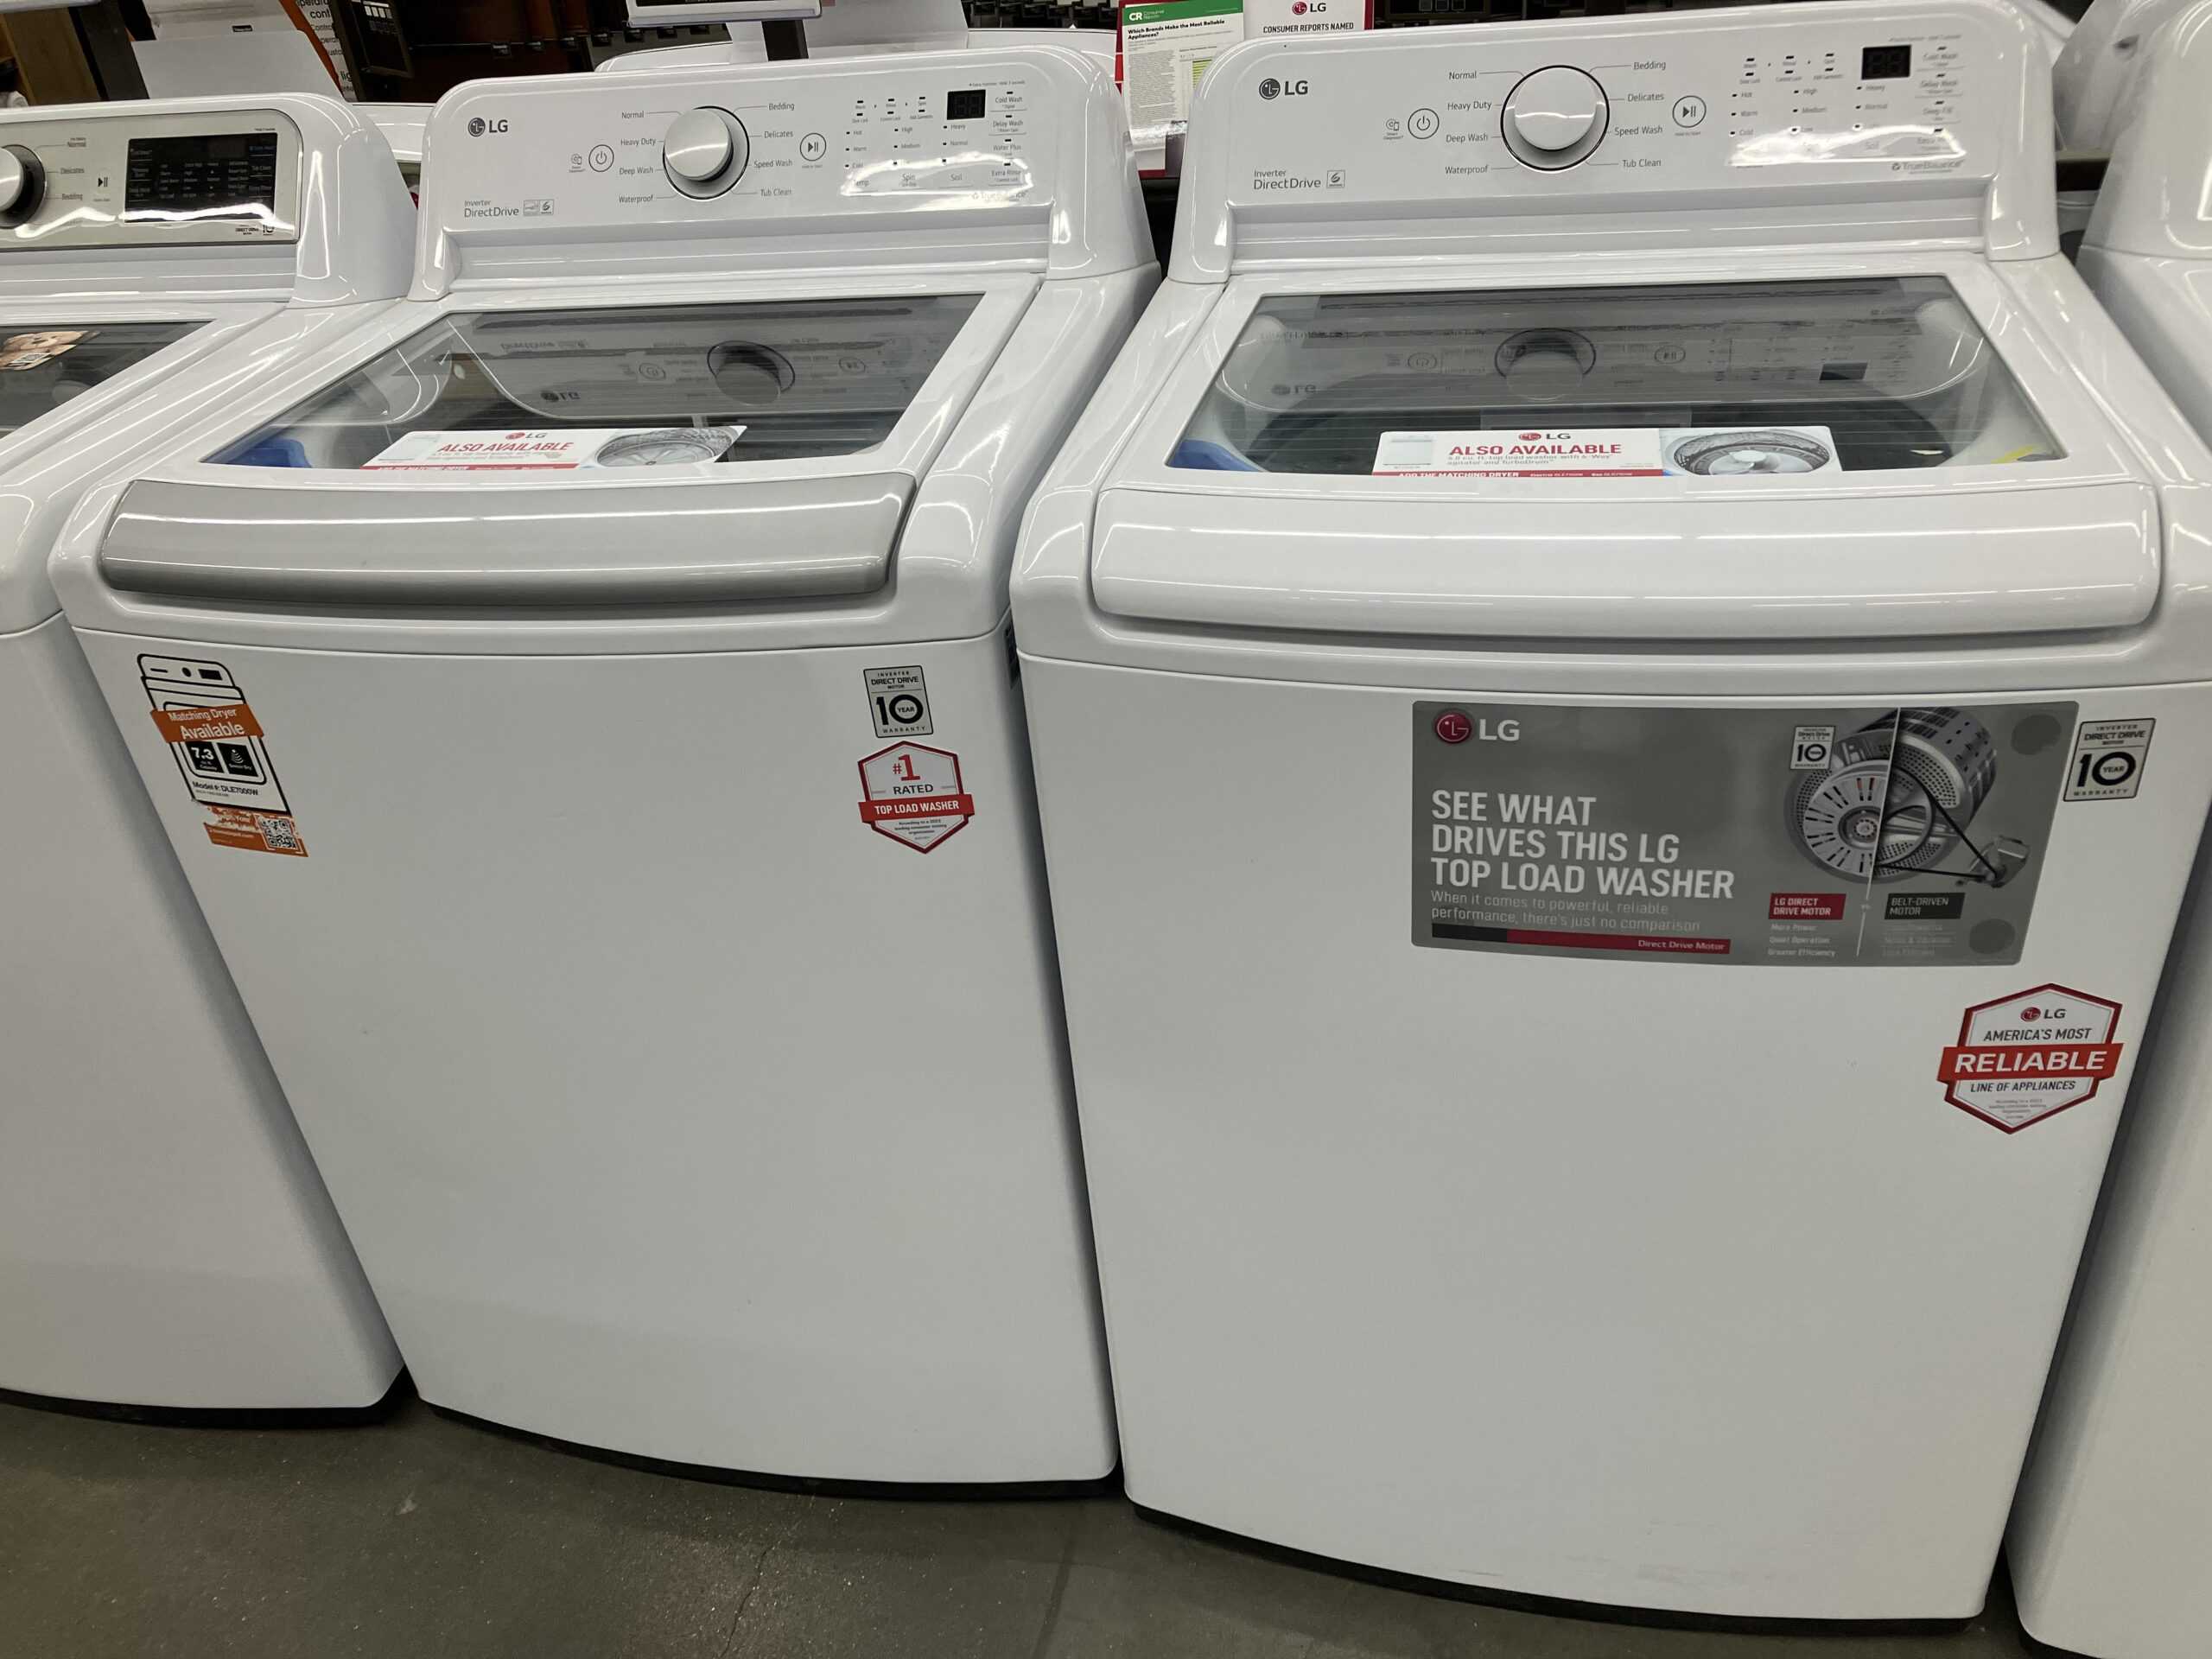 LG washing machines